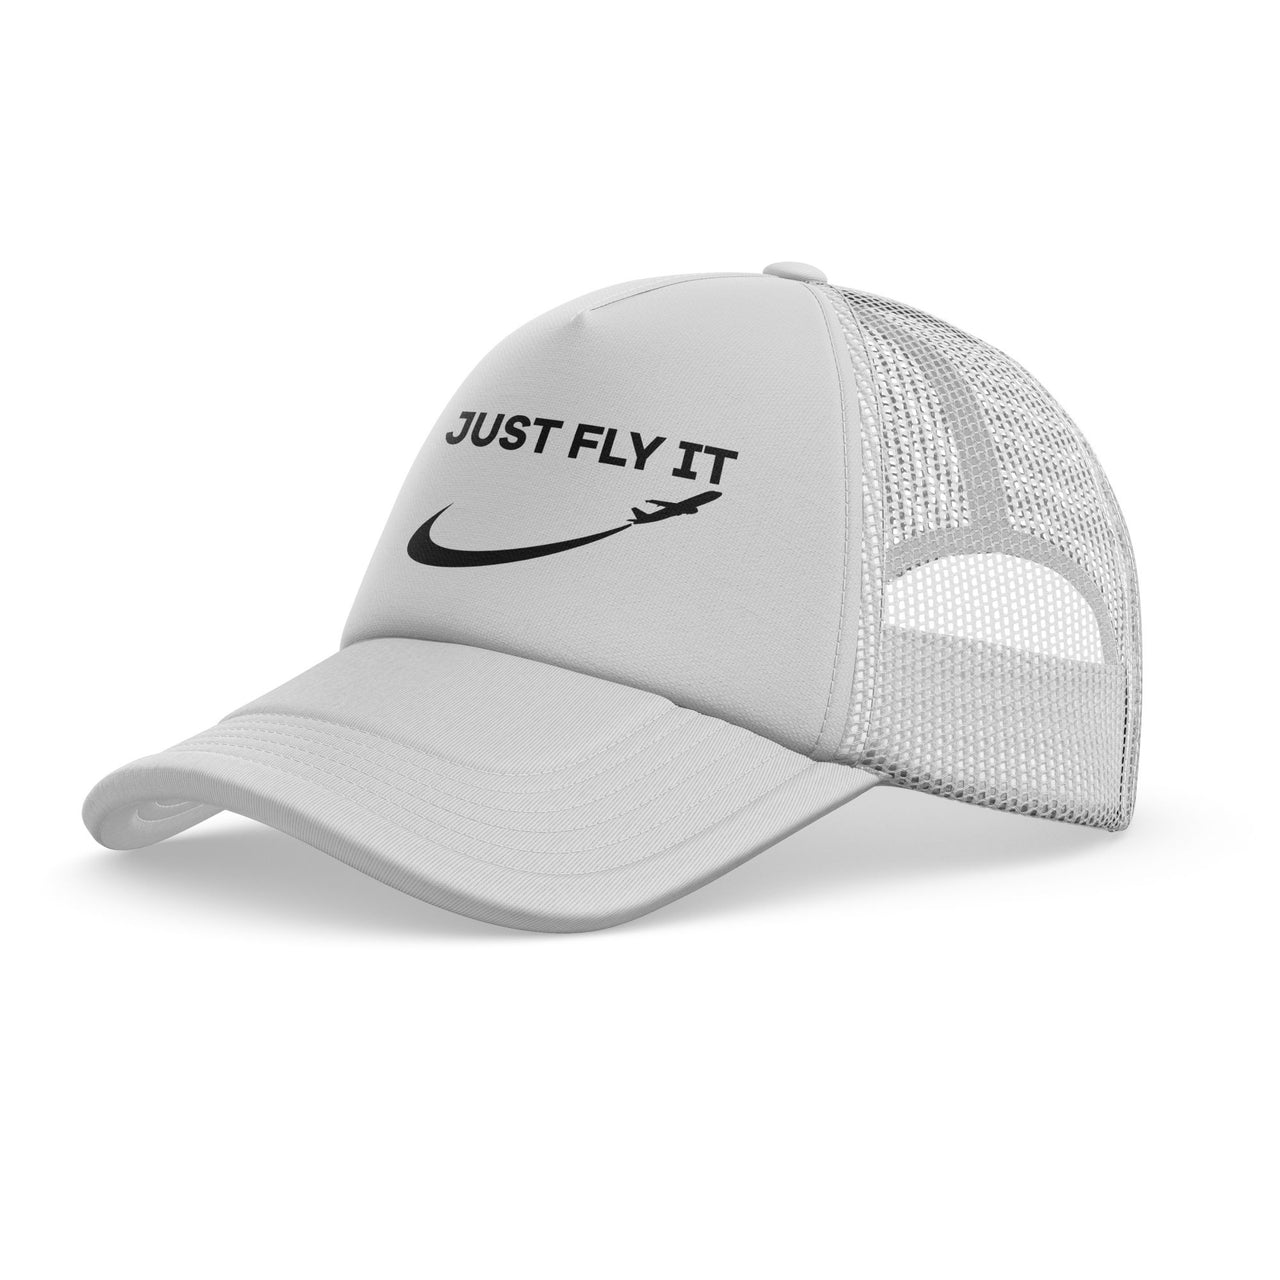 Just Fly It 2 Designed Trucker Caps & Hats